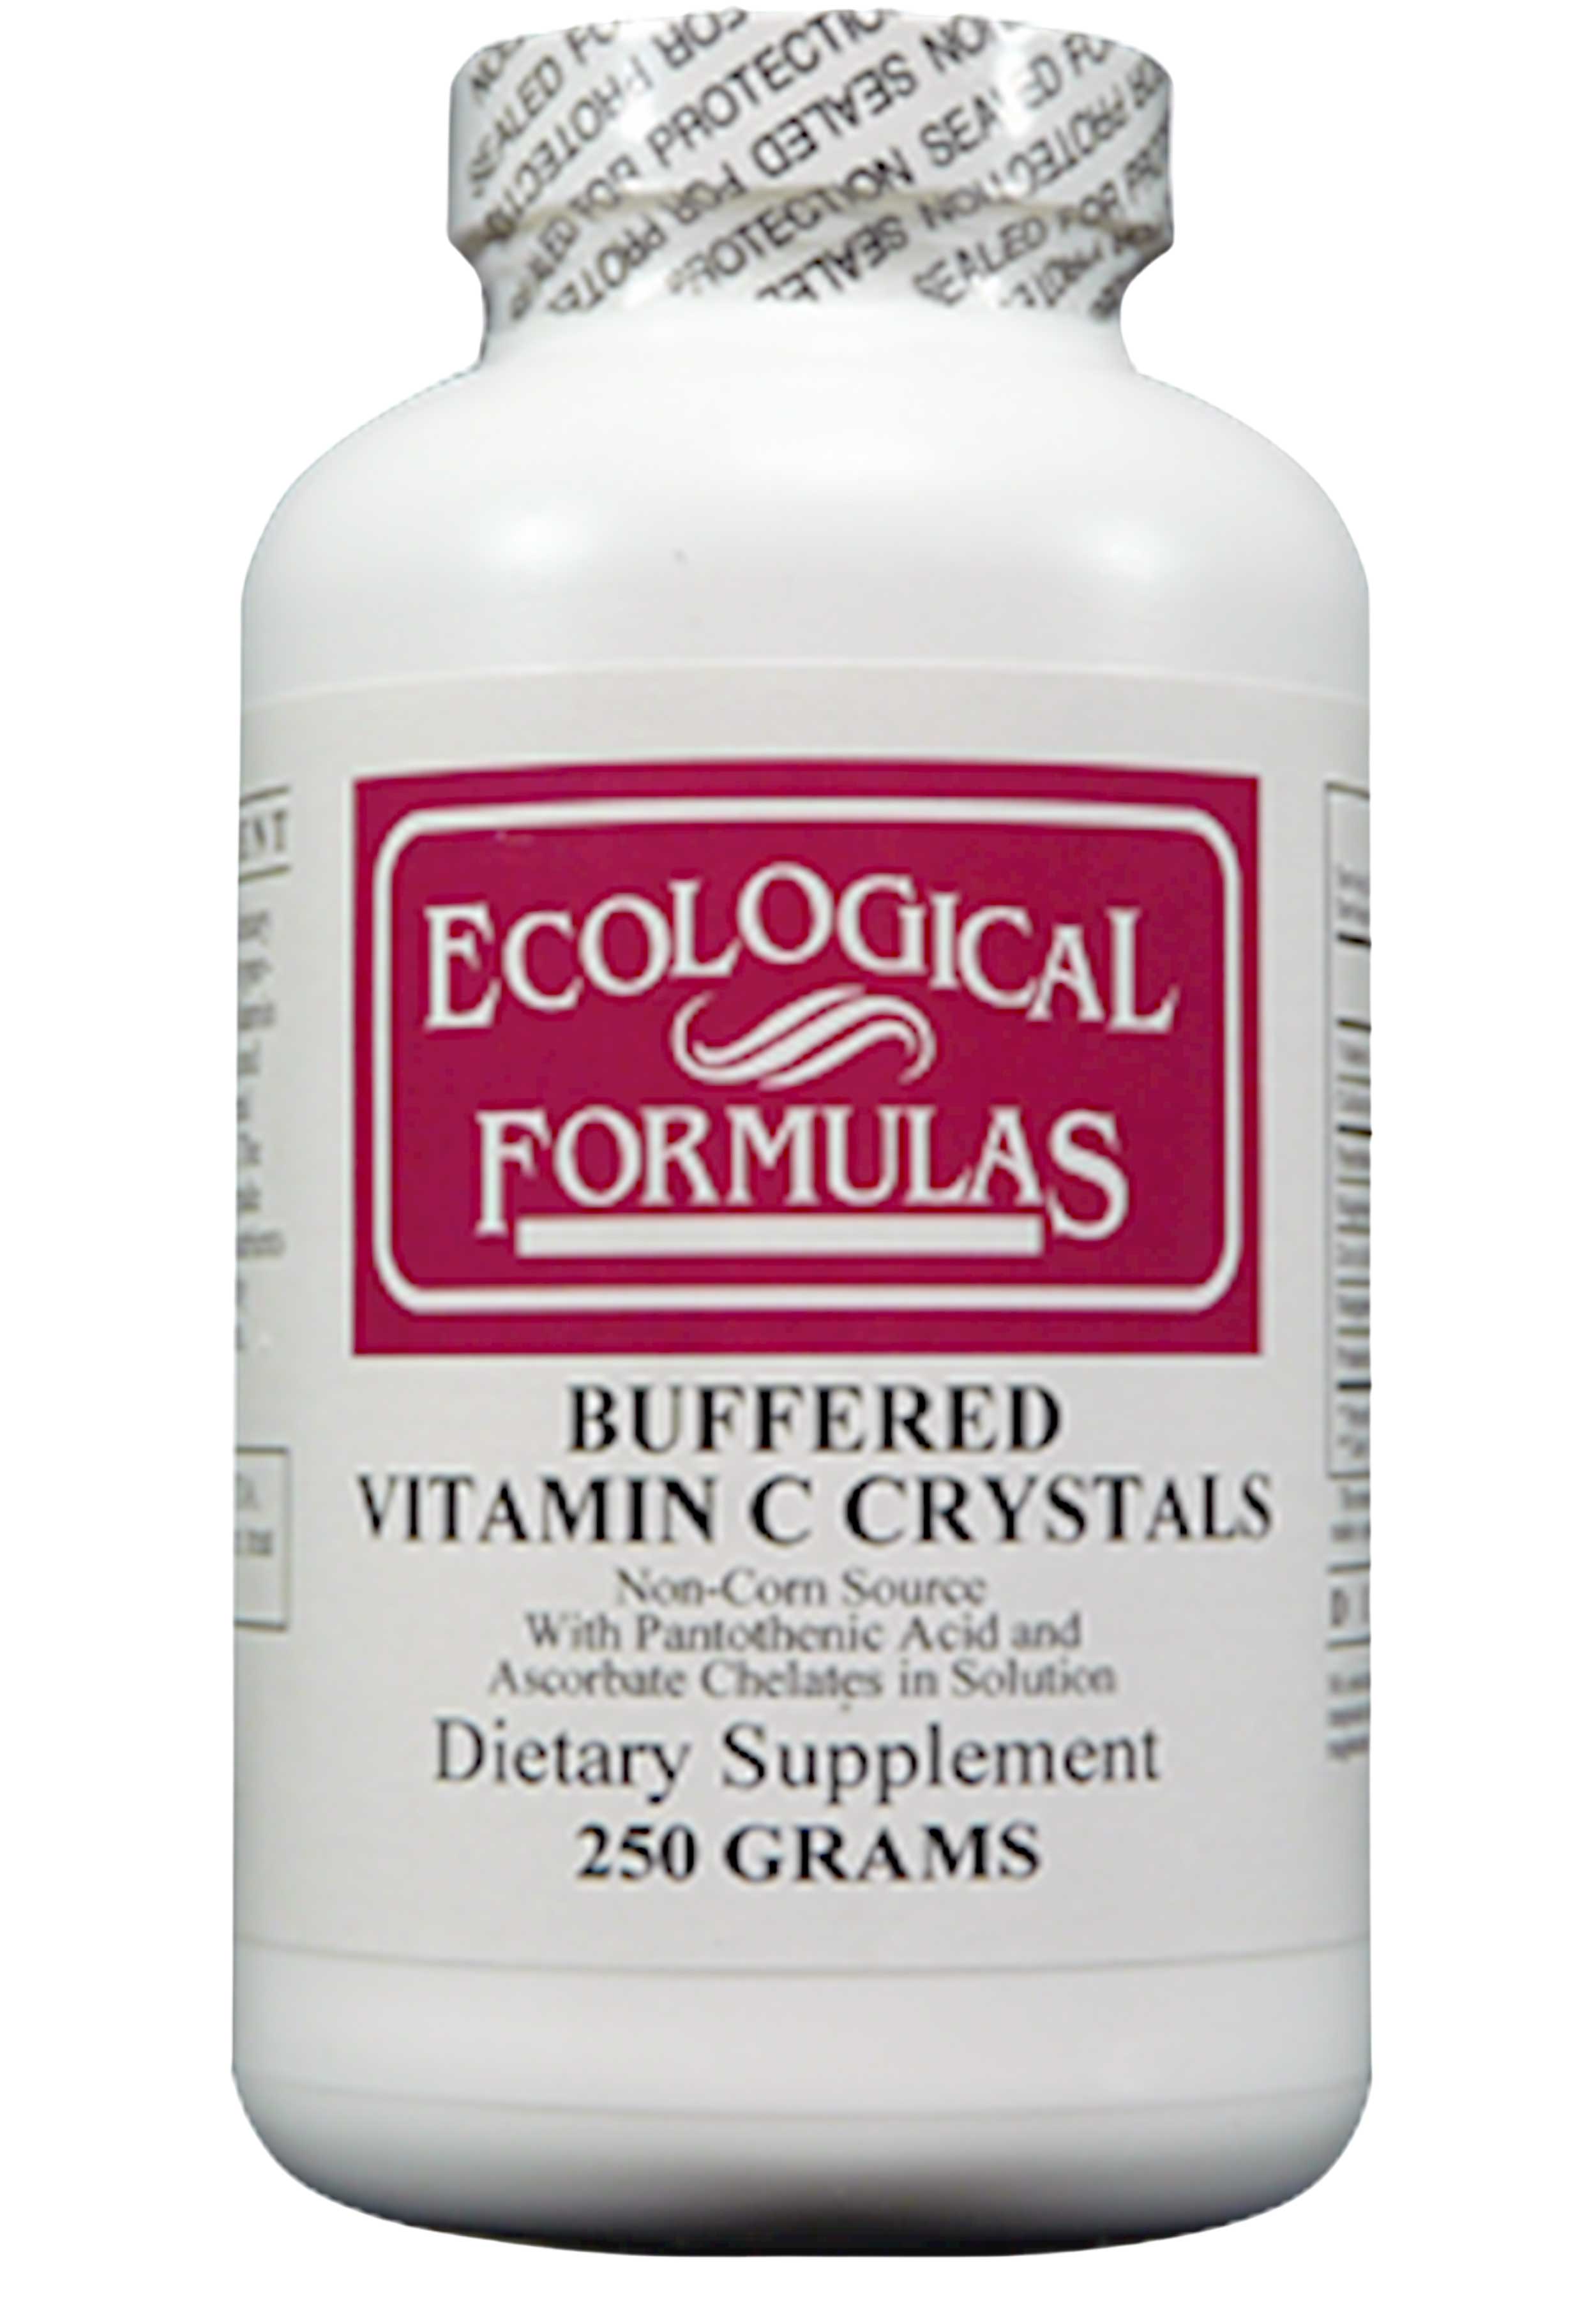 Ecological Formulas/Cardiovascular Research Buffered Vitamin C Crystals (non-corn)